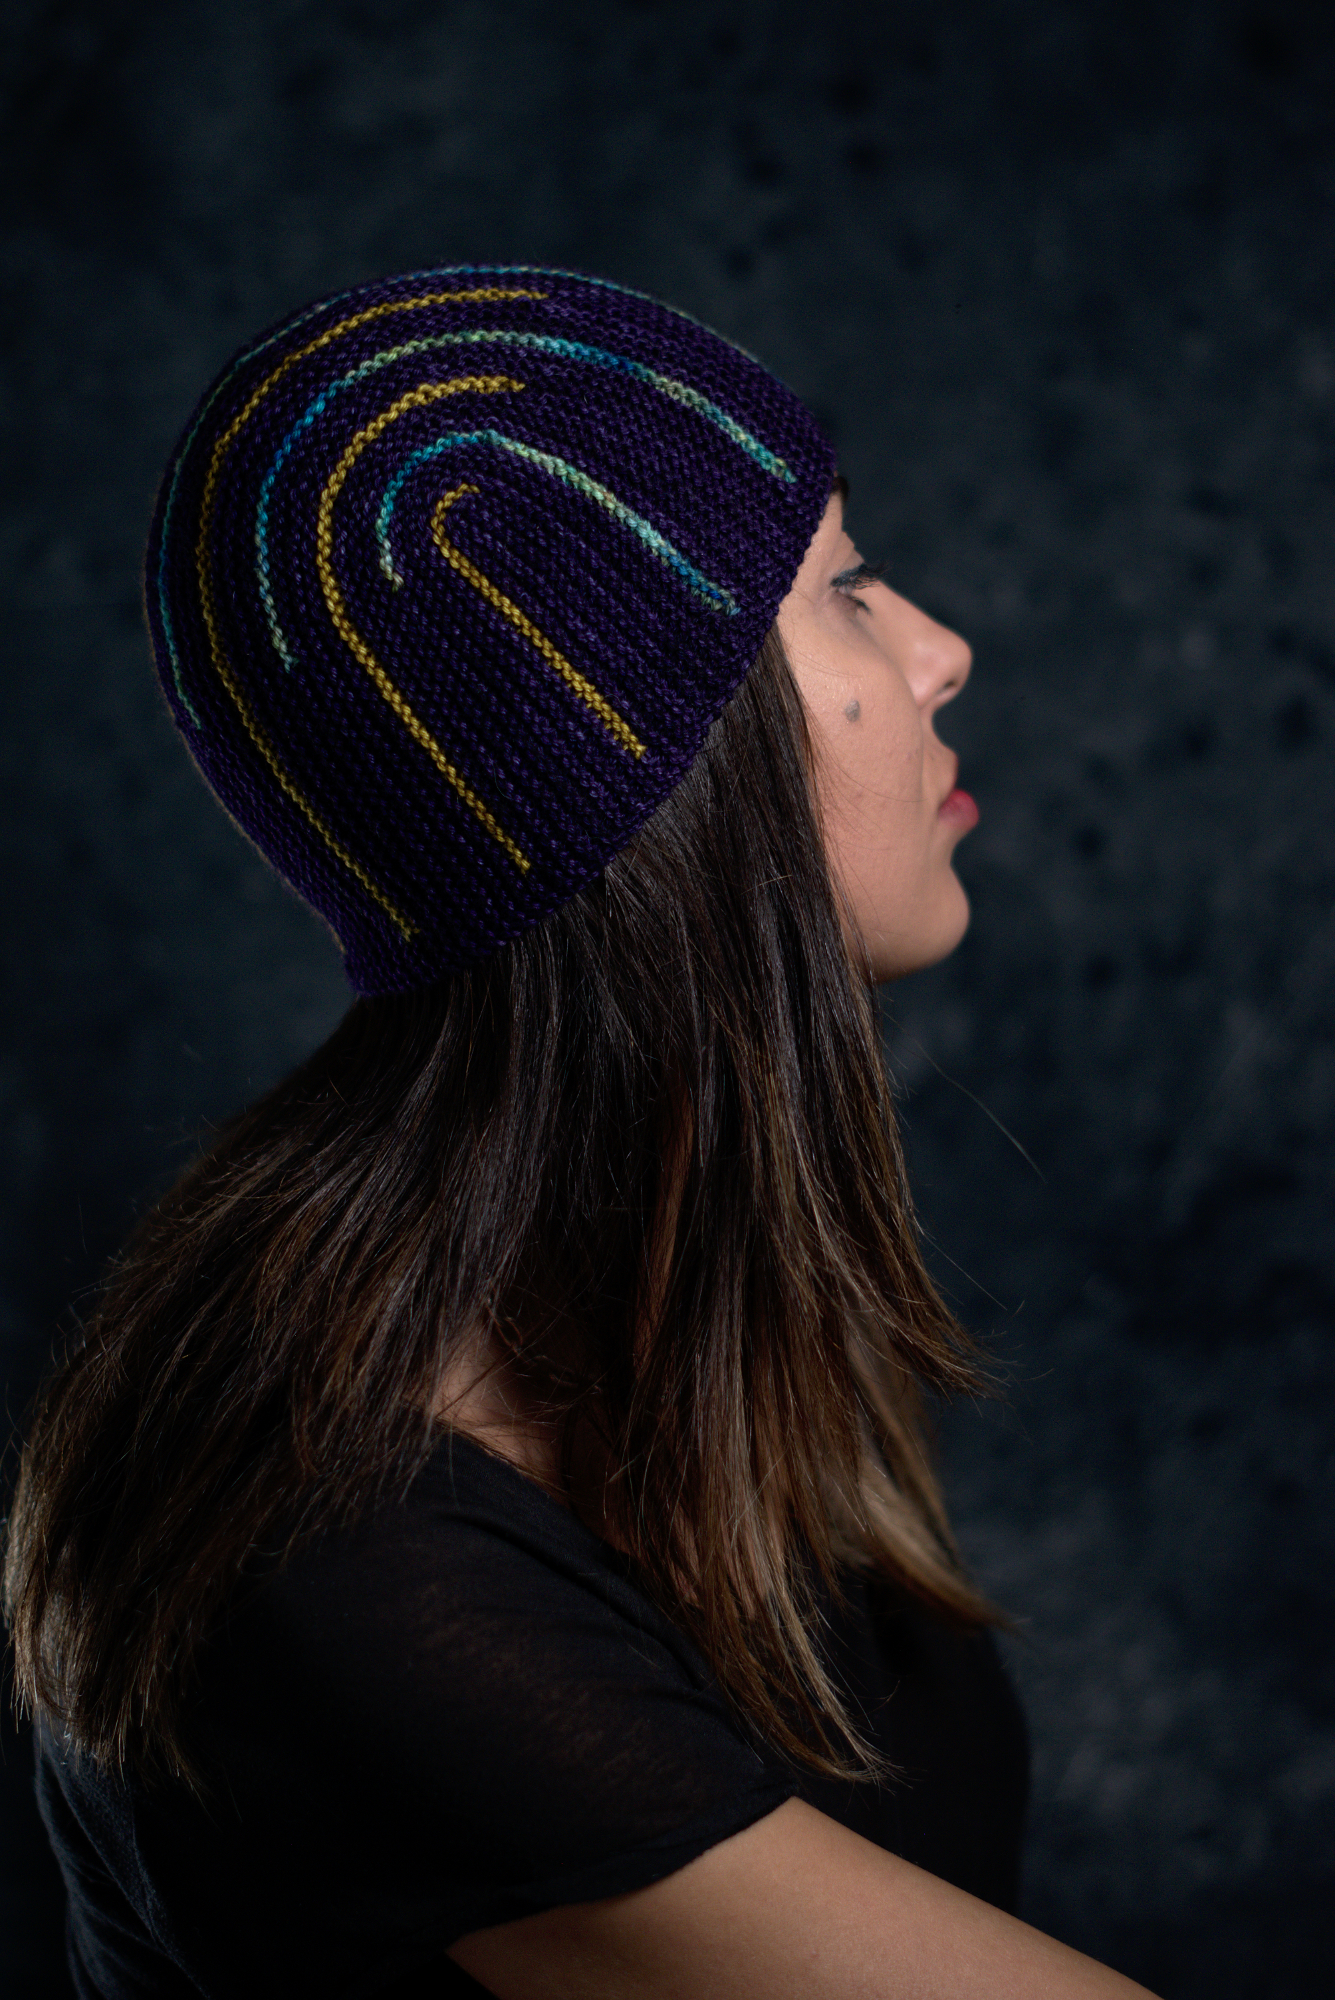 Duality sideways knit short row striped hat knitting pattern